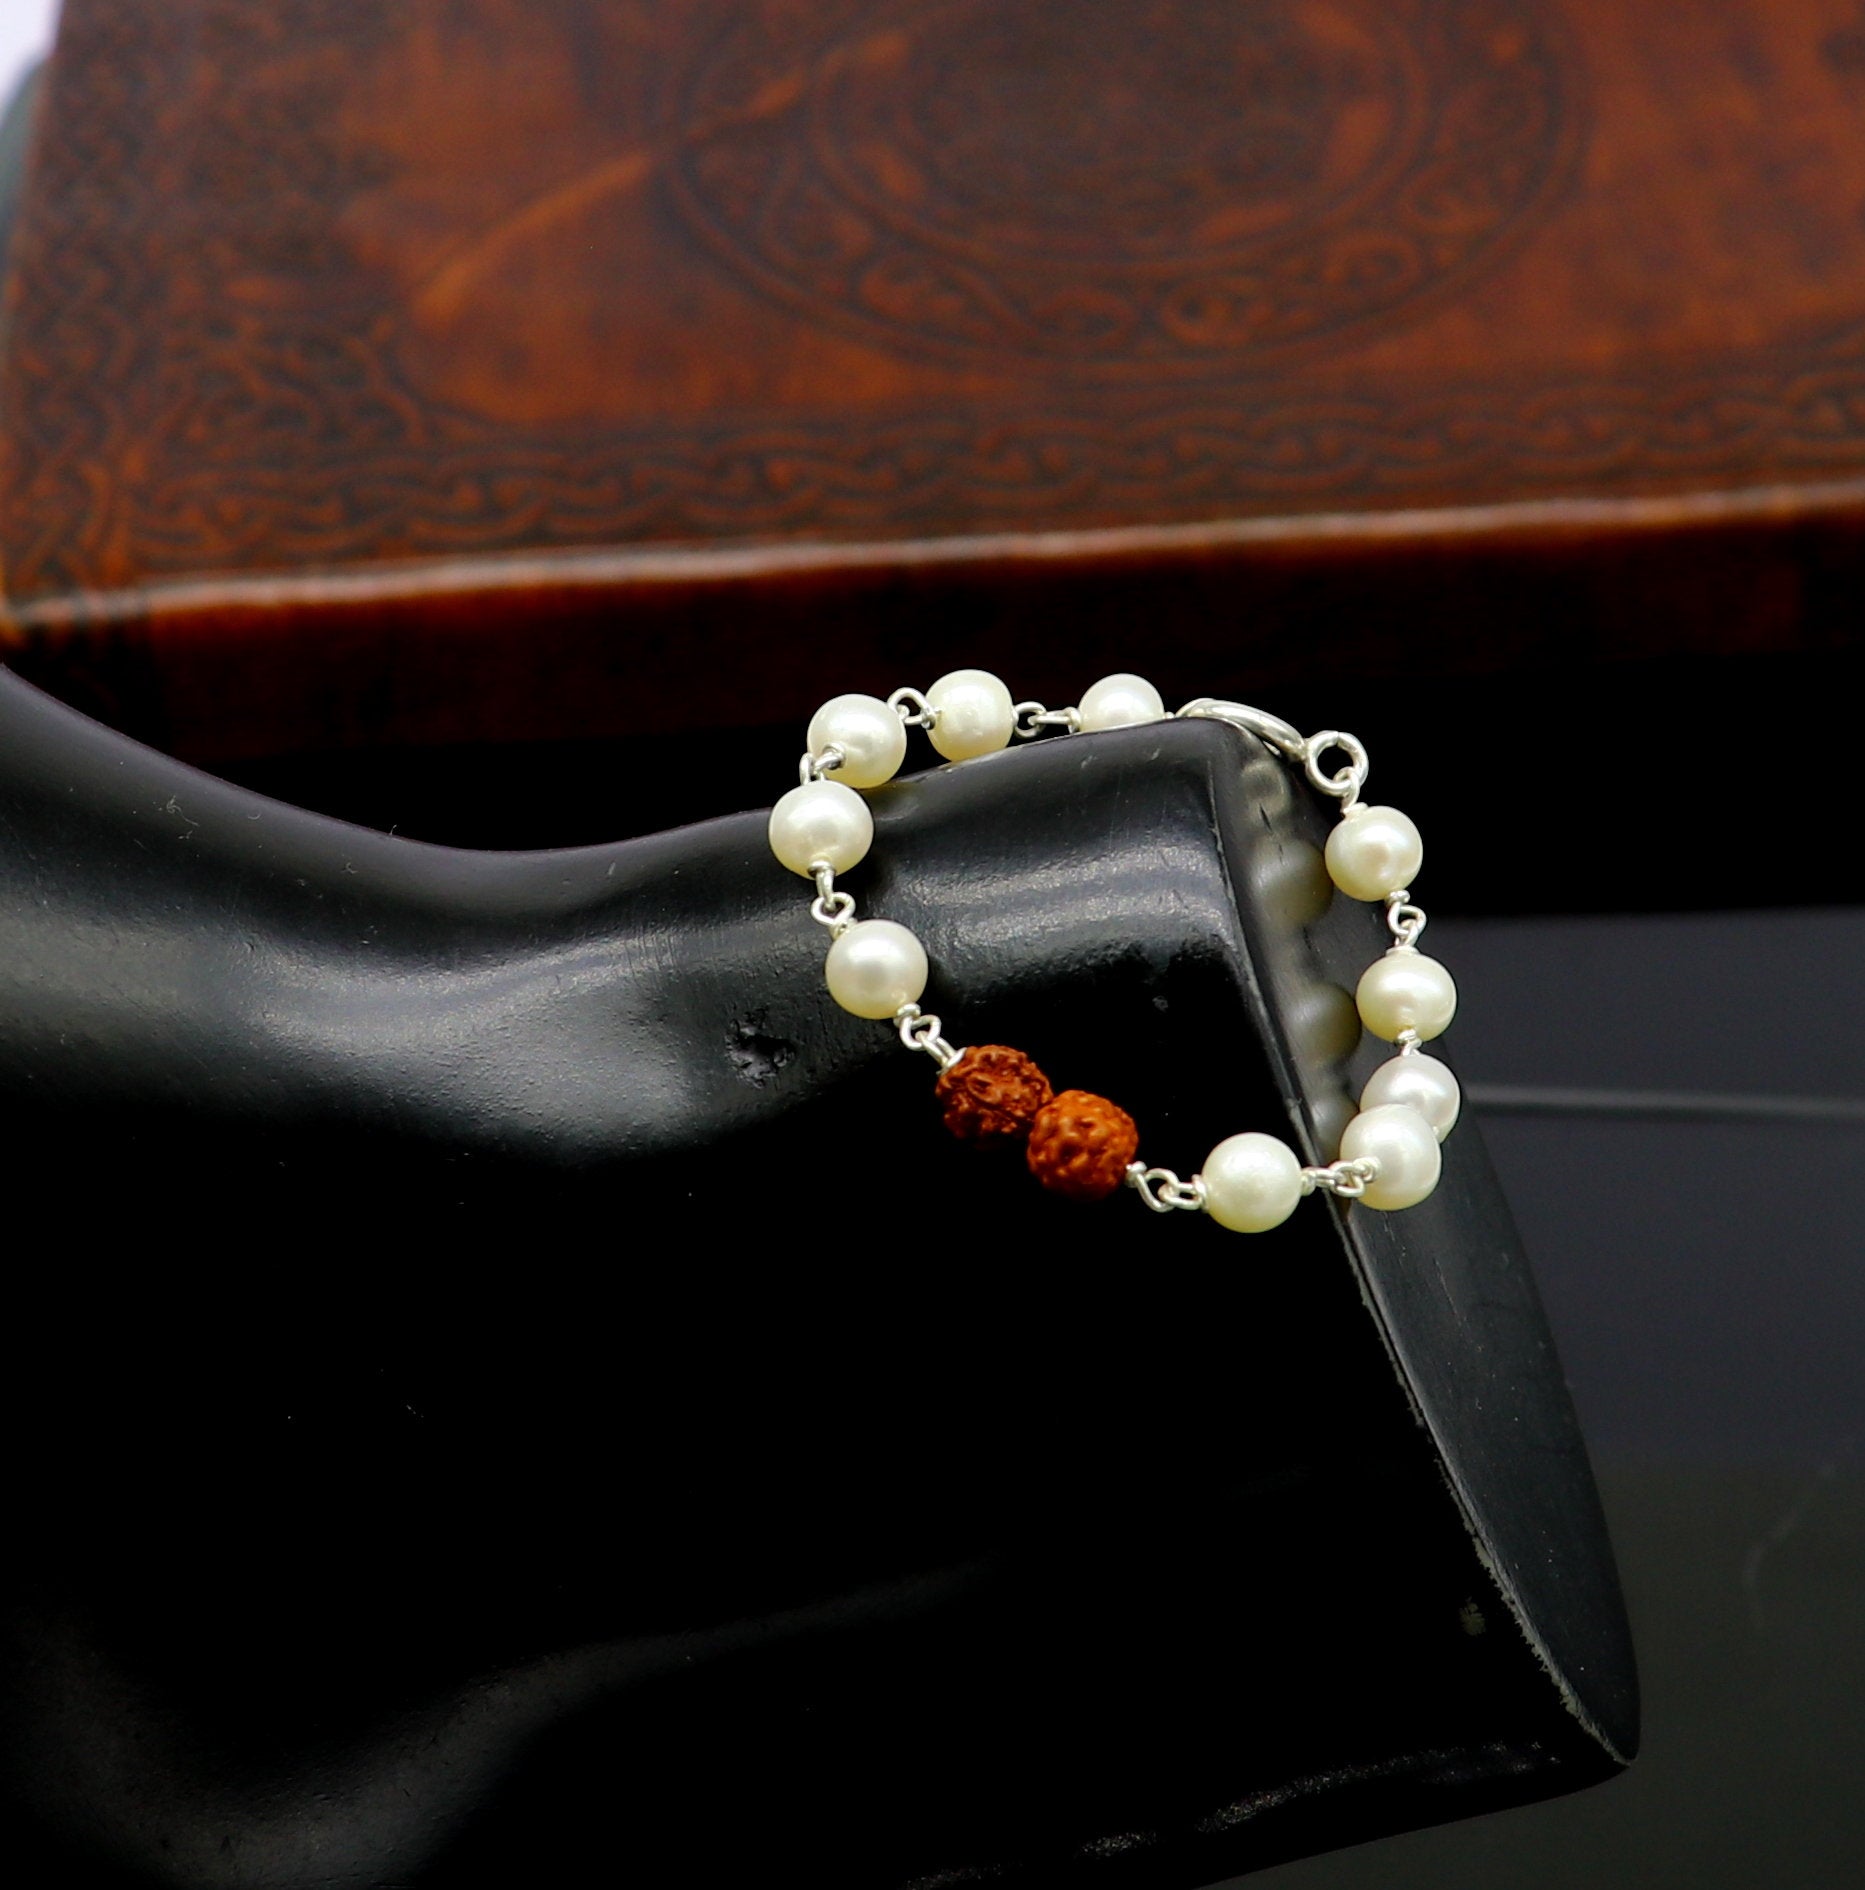 Handmade New Pearl Style Silver Hook Bracelets Jewelry Collection Pearl  Bracelet Fancy Bracelet, हाथ से बना ब्रेसलेट, हैंडमेड ब्रेसलेट - Art  Palace, Jaipur | ID: 2851921768997